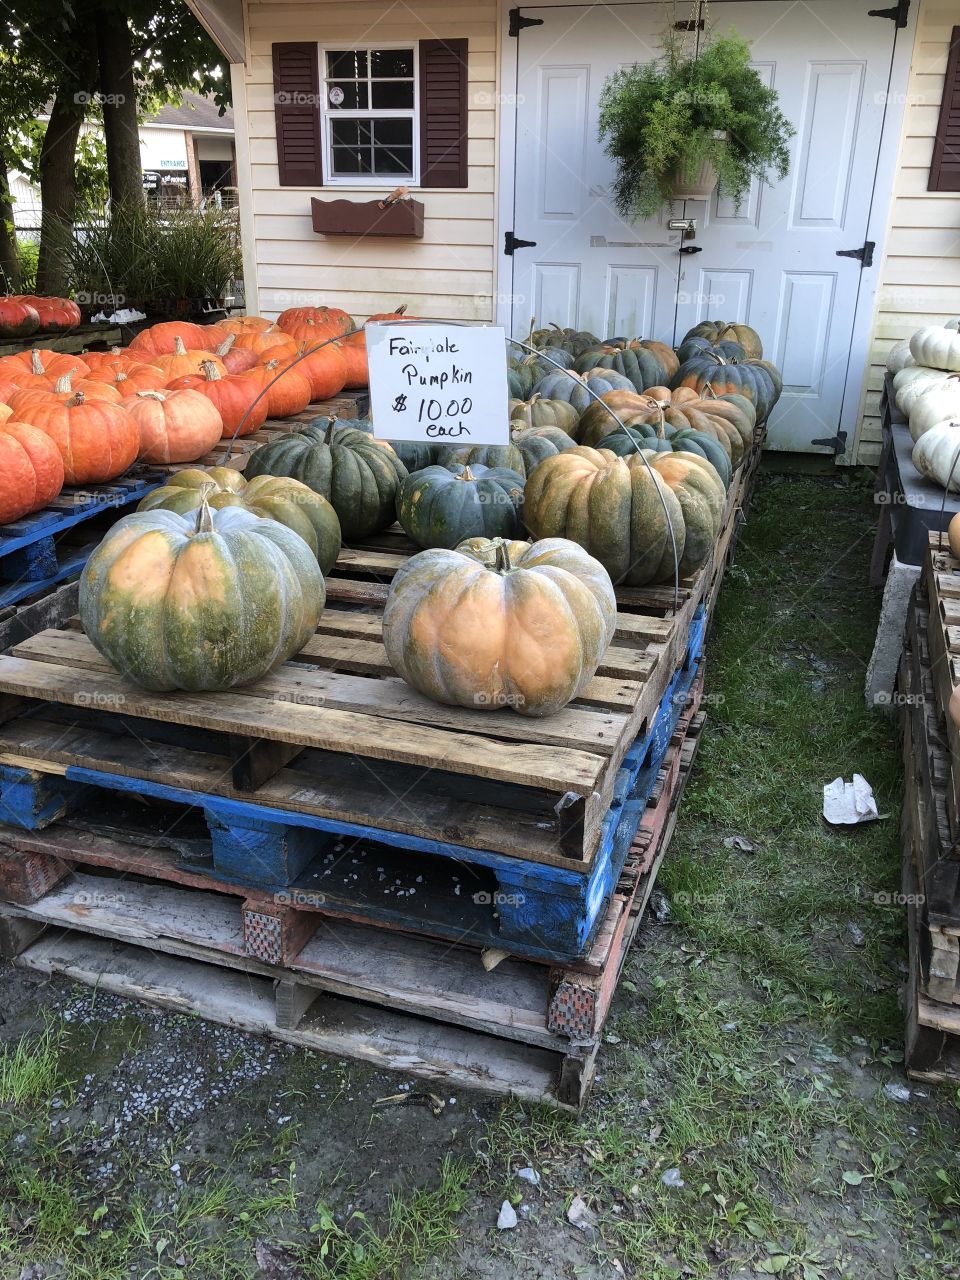 Fairytale pumpkins Maryland farm stand 